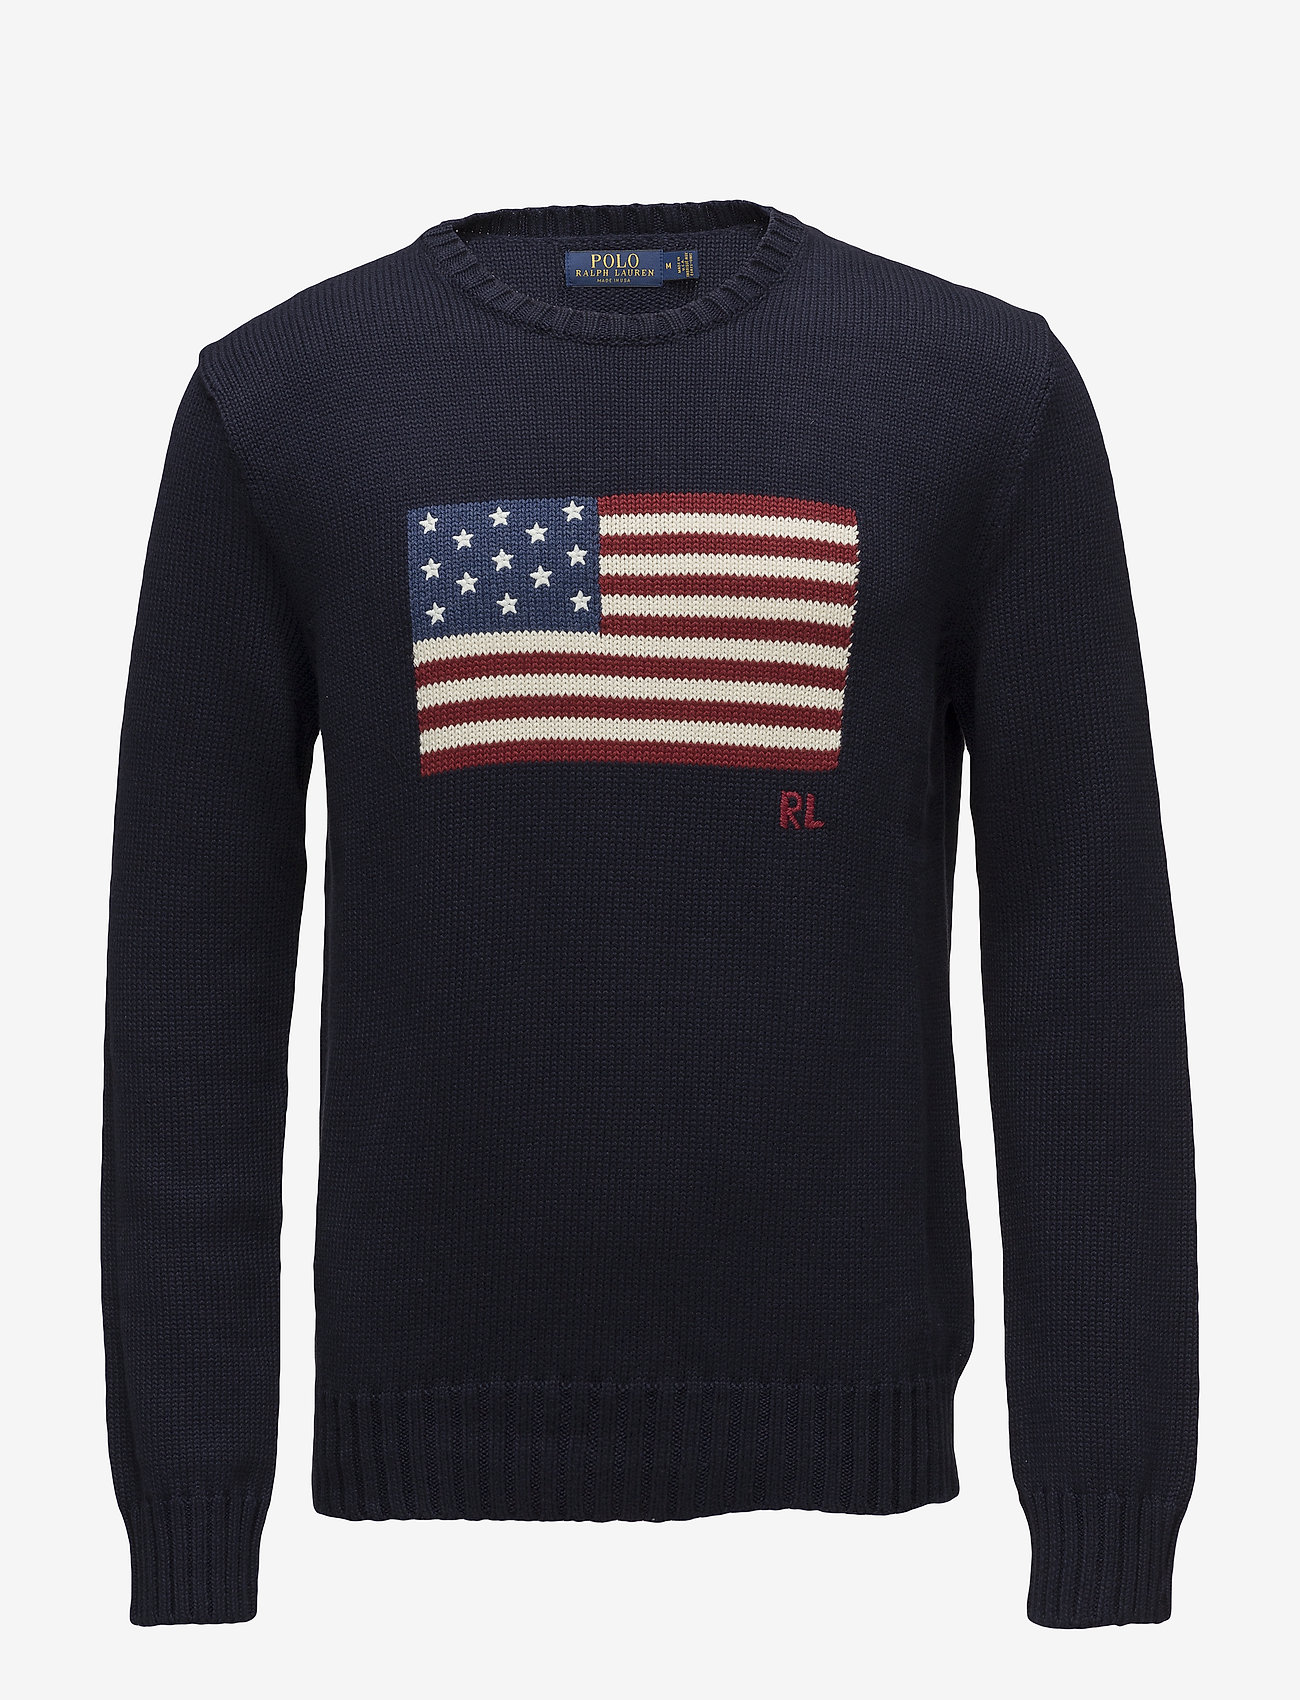 Polo Ralph Lauren The Iconic Flag Sweater - Okrągły dekolt - Boozt.com